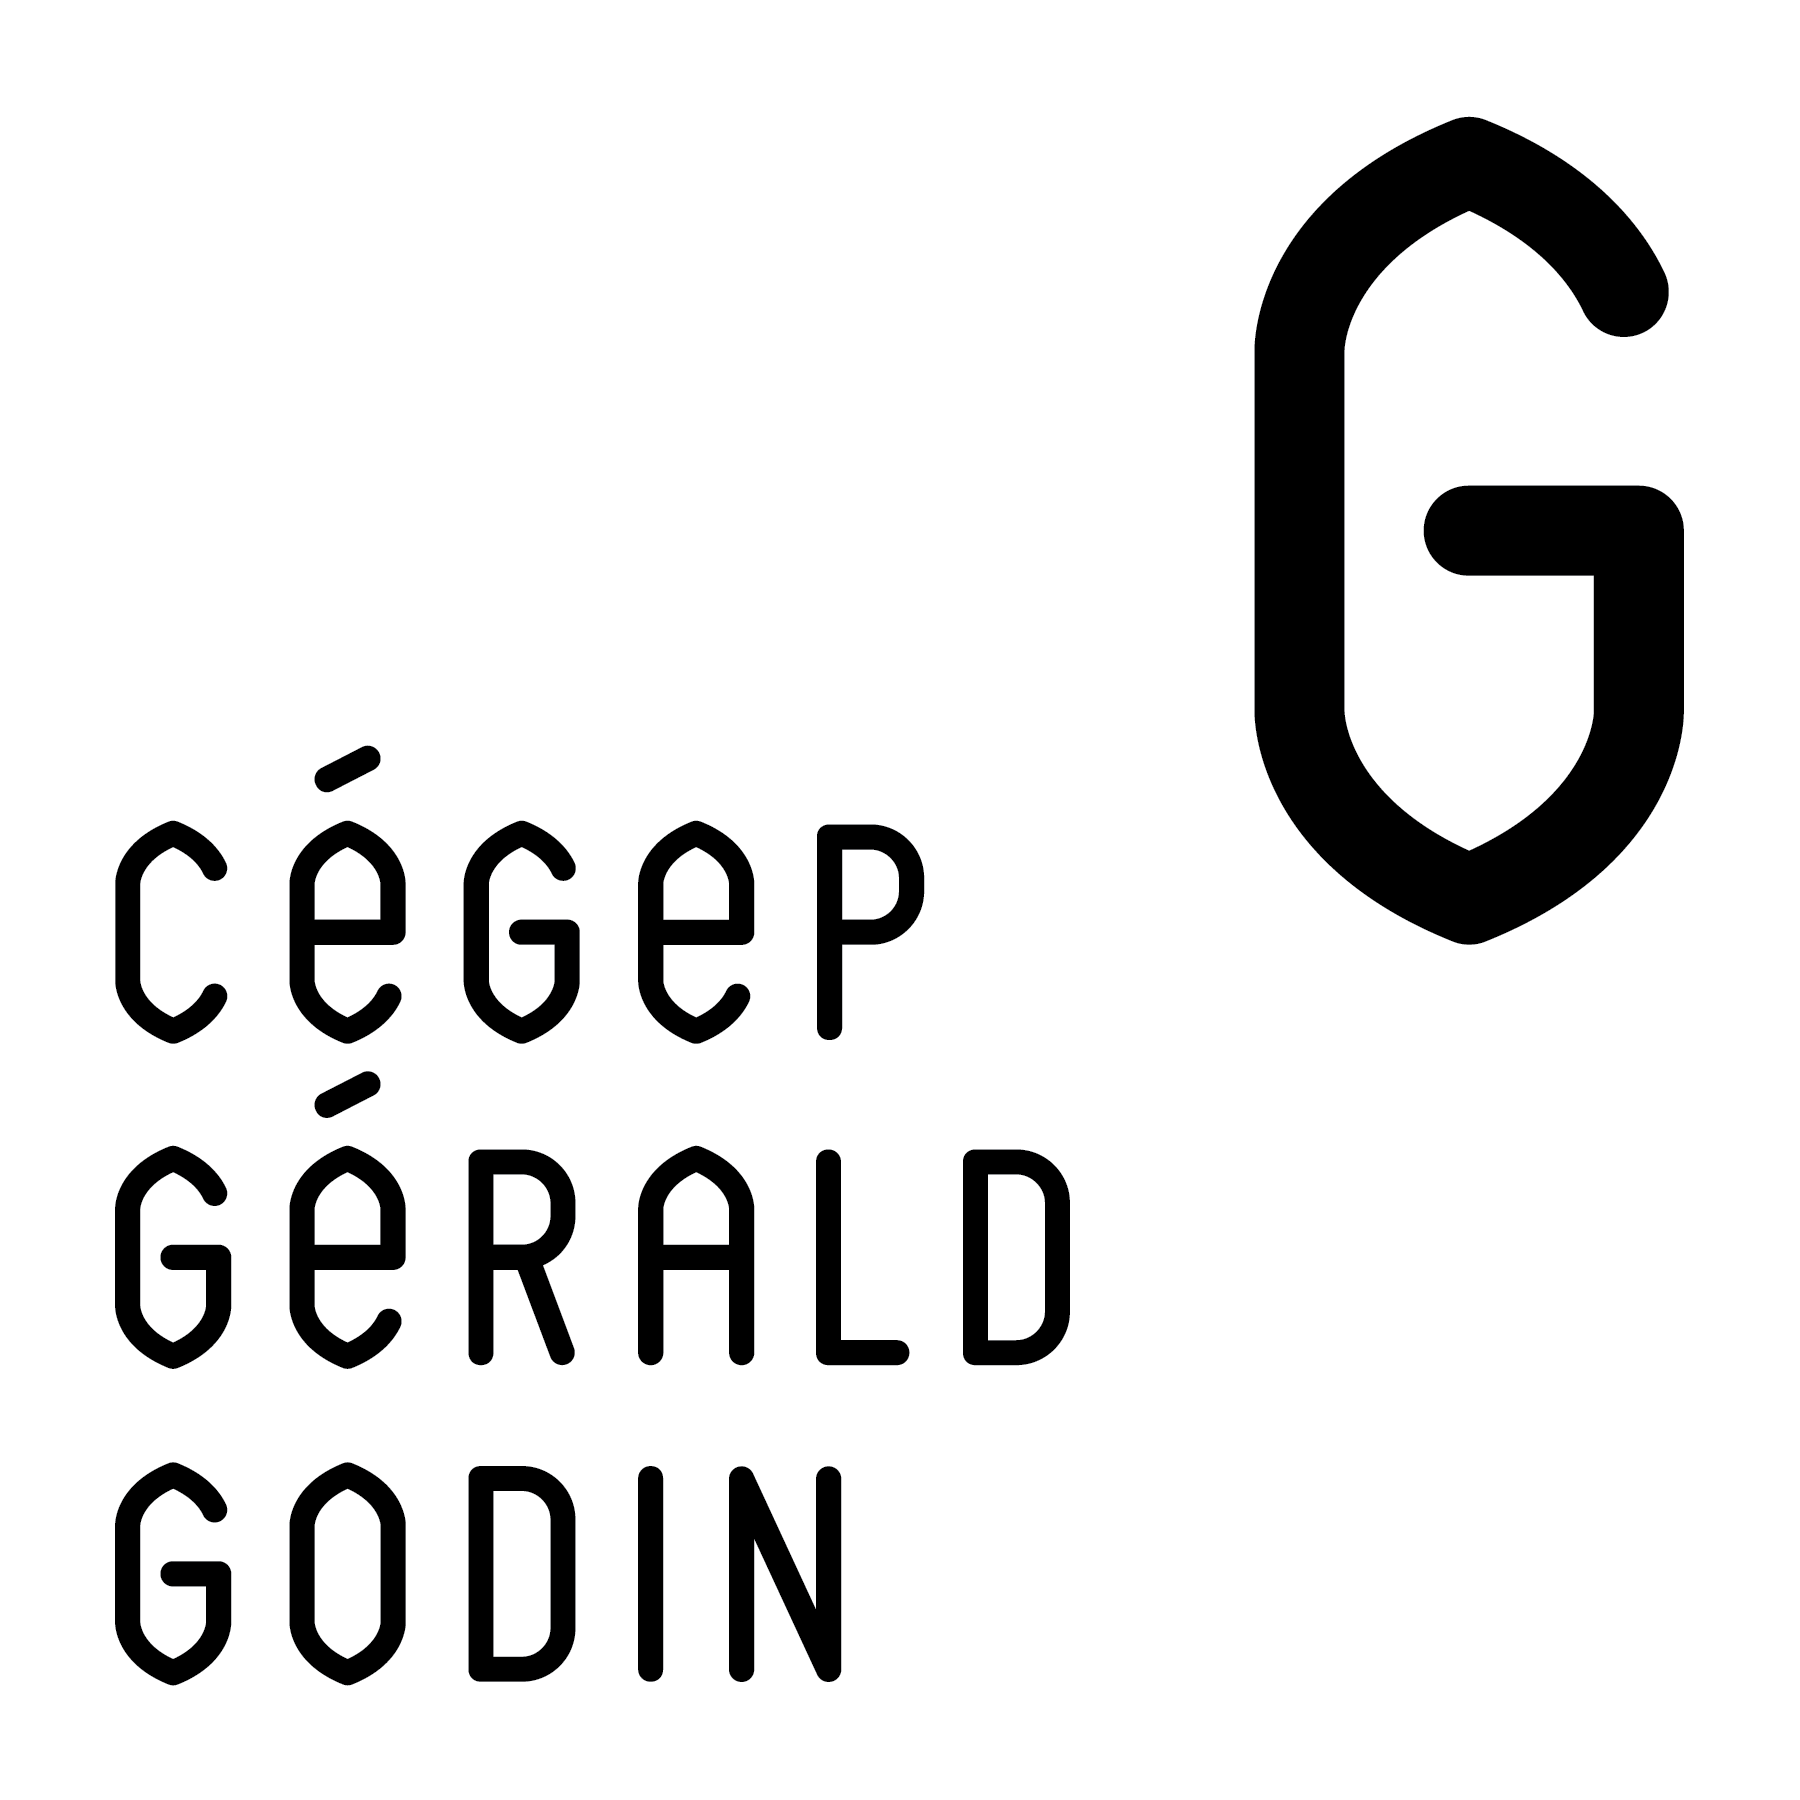 Cégep Gérald-Godin